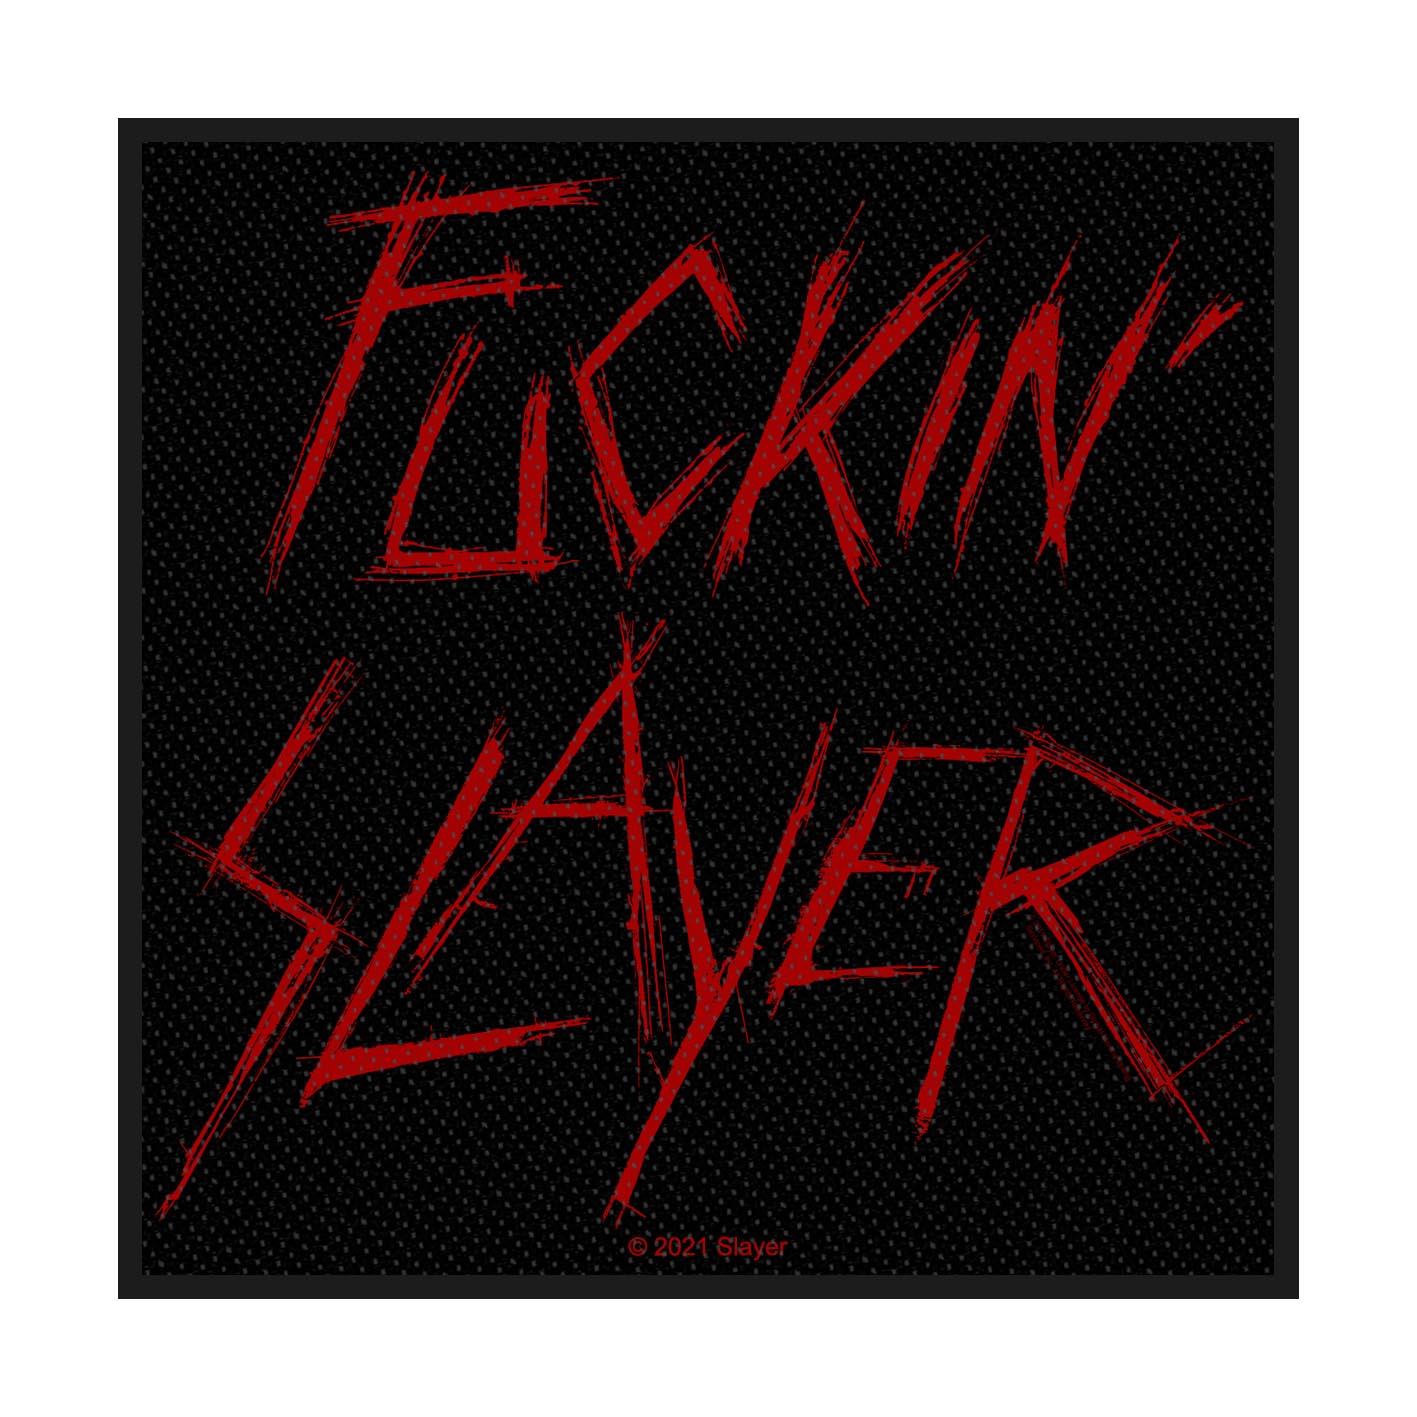 SLAYER - Fuckin Slayer PATCH